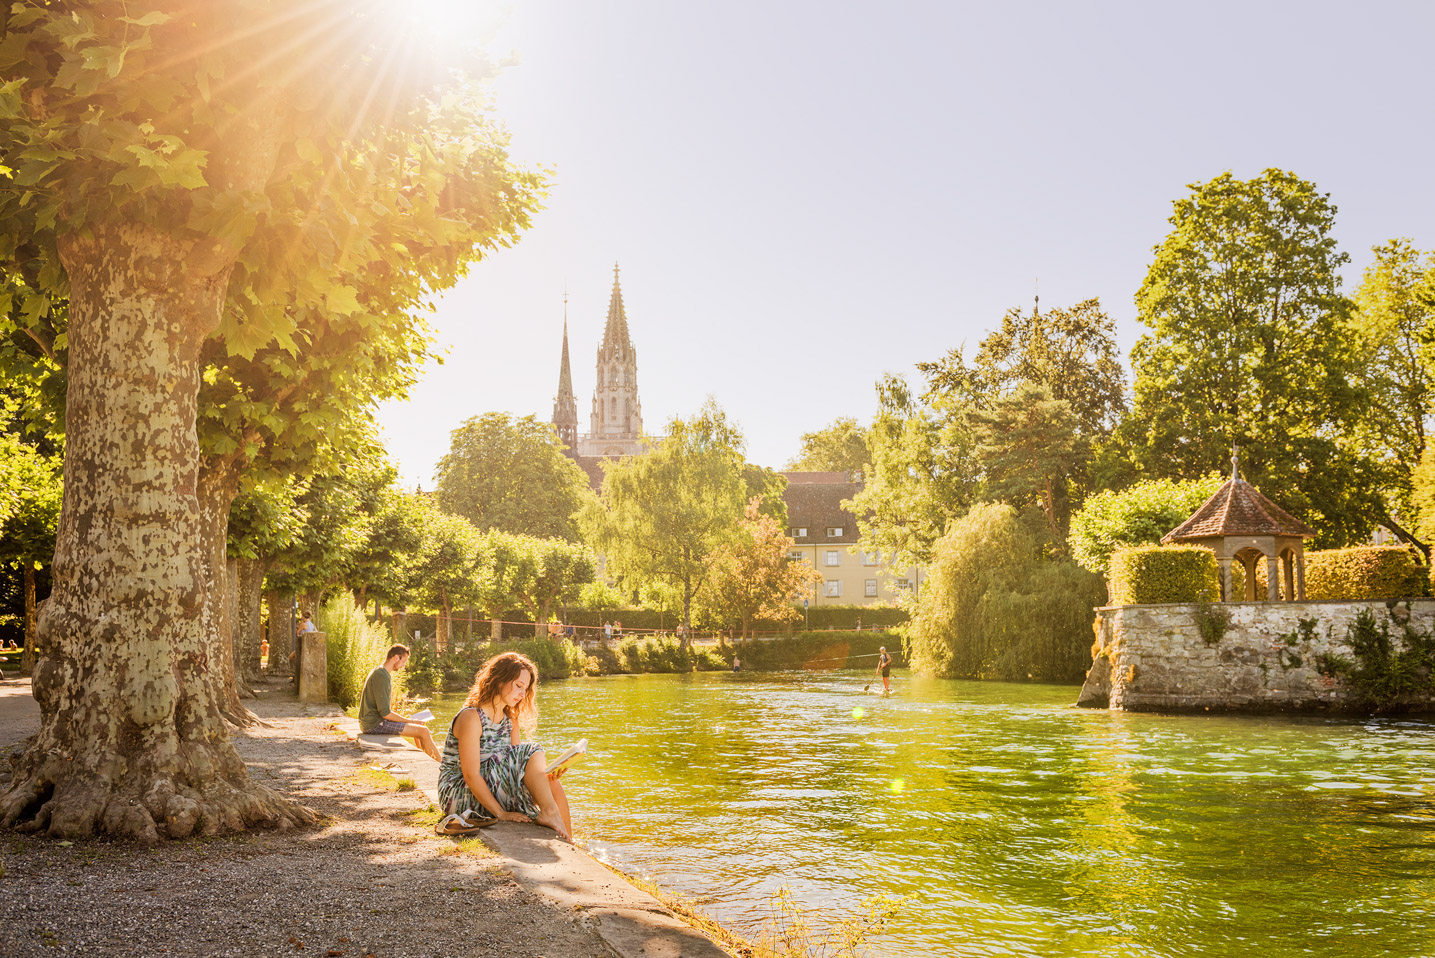 Blick auf den grünen Stadtgarten am Seeufer der Stadt Konstanz